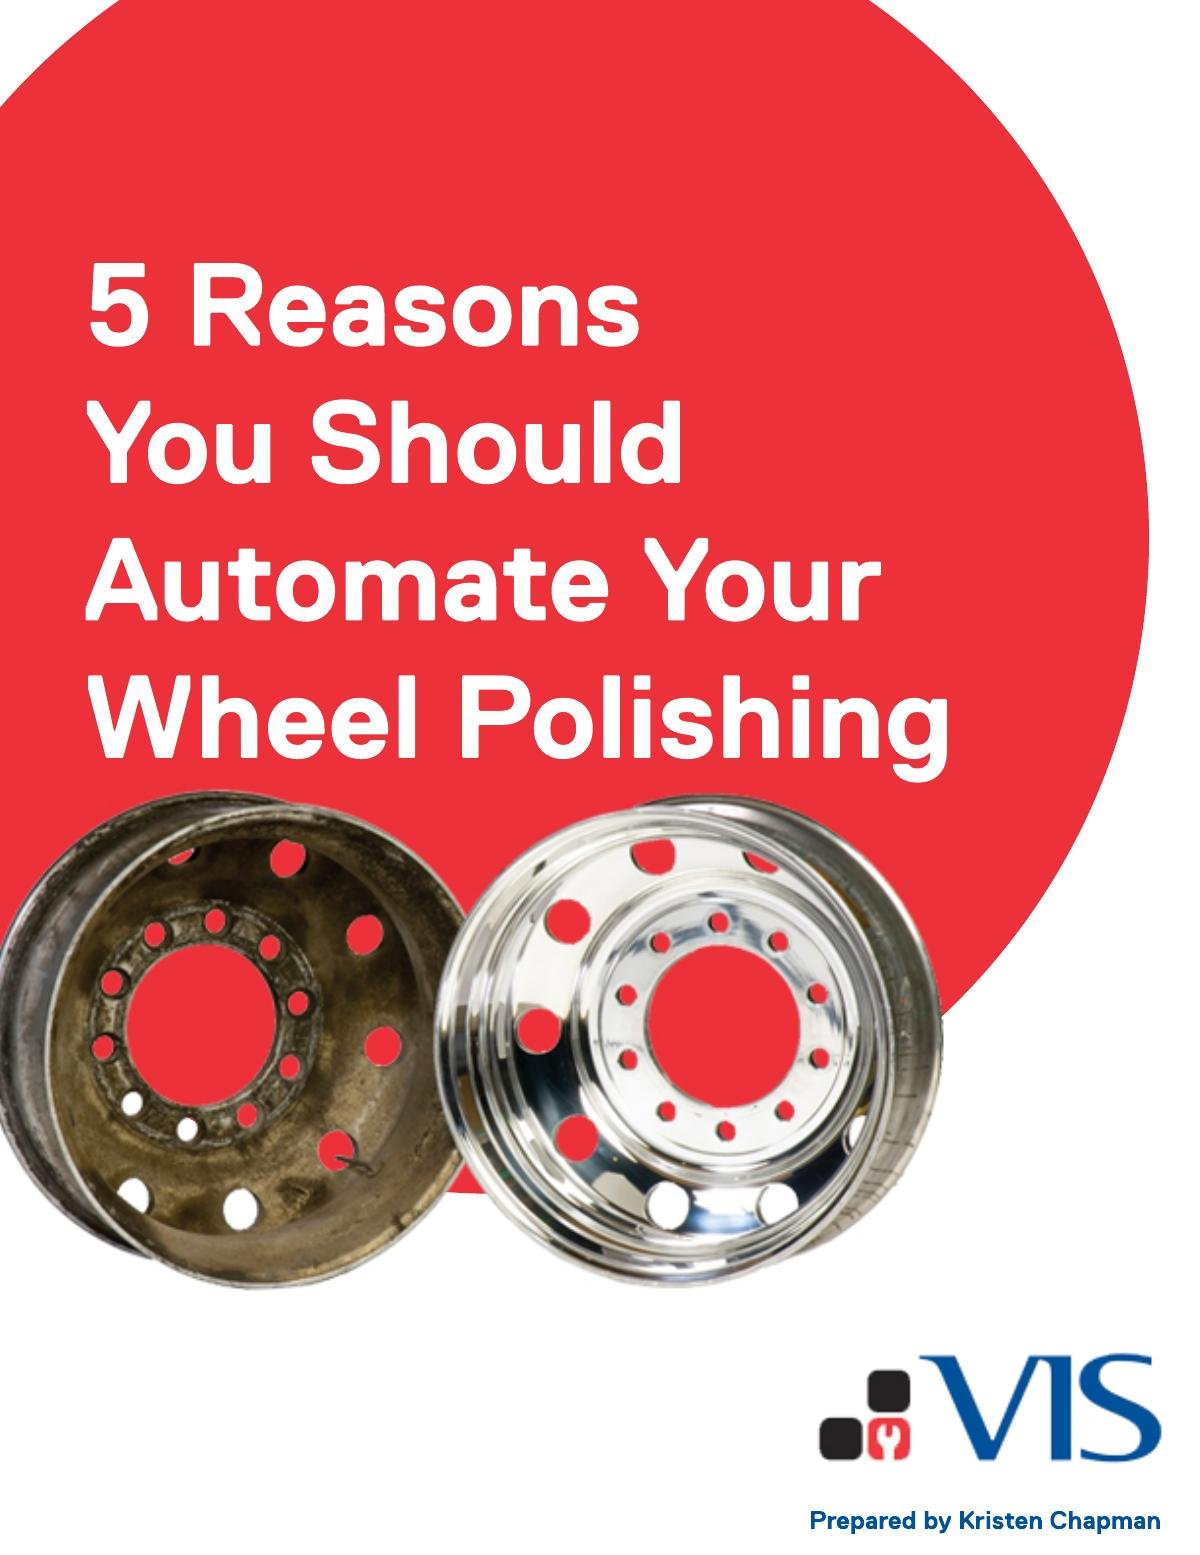 5 Reasons You Should Automate Your Wheel Polishing